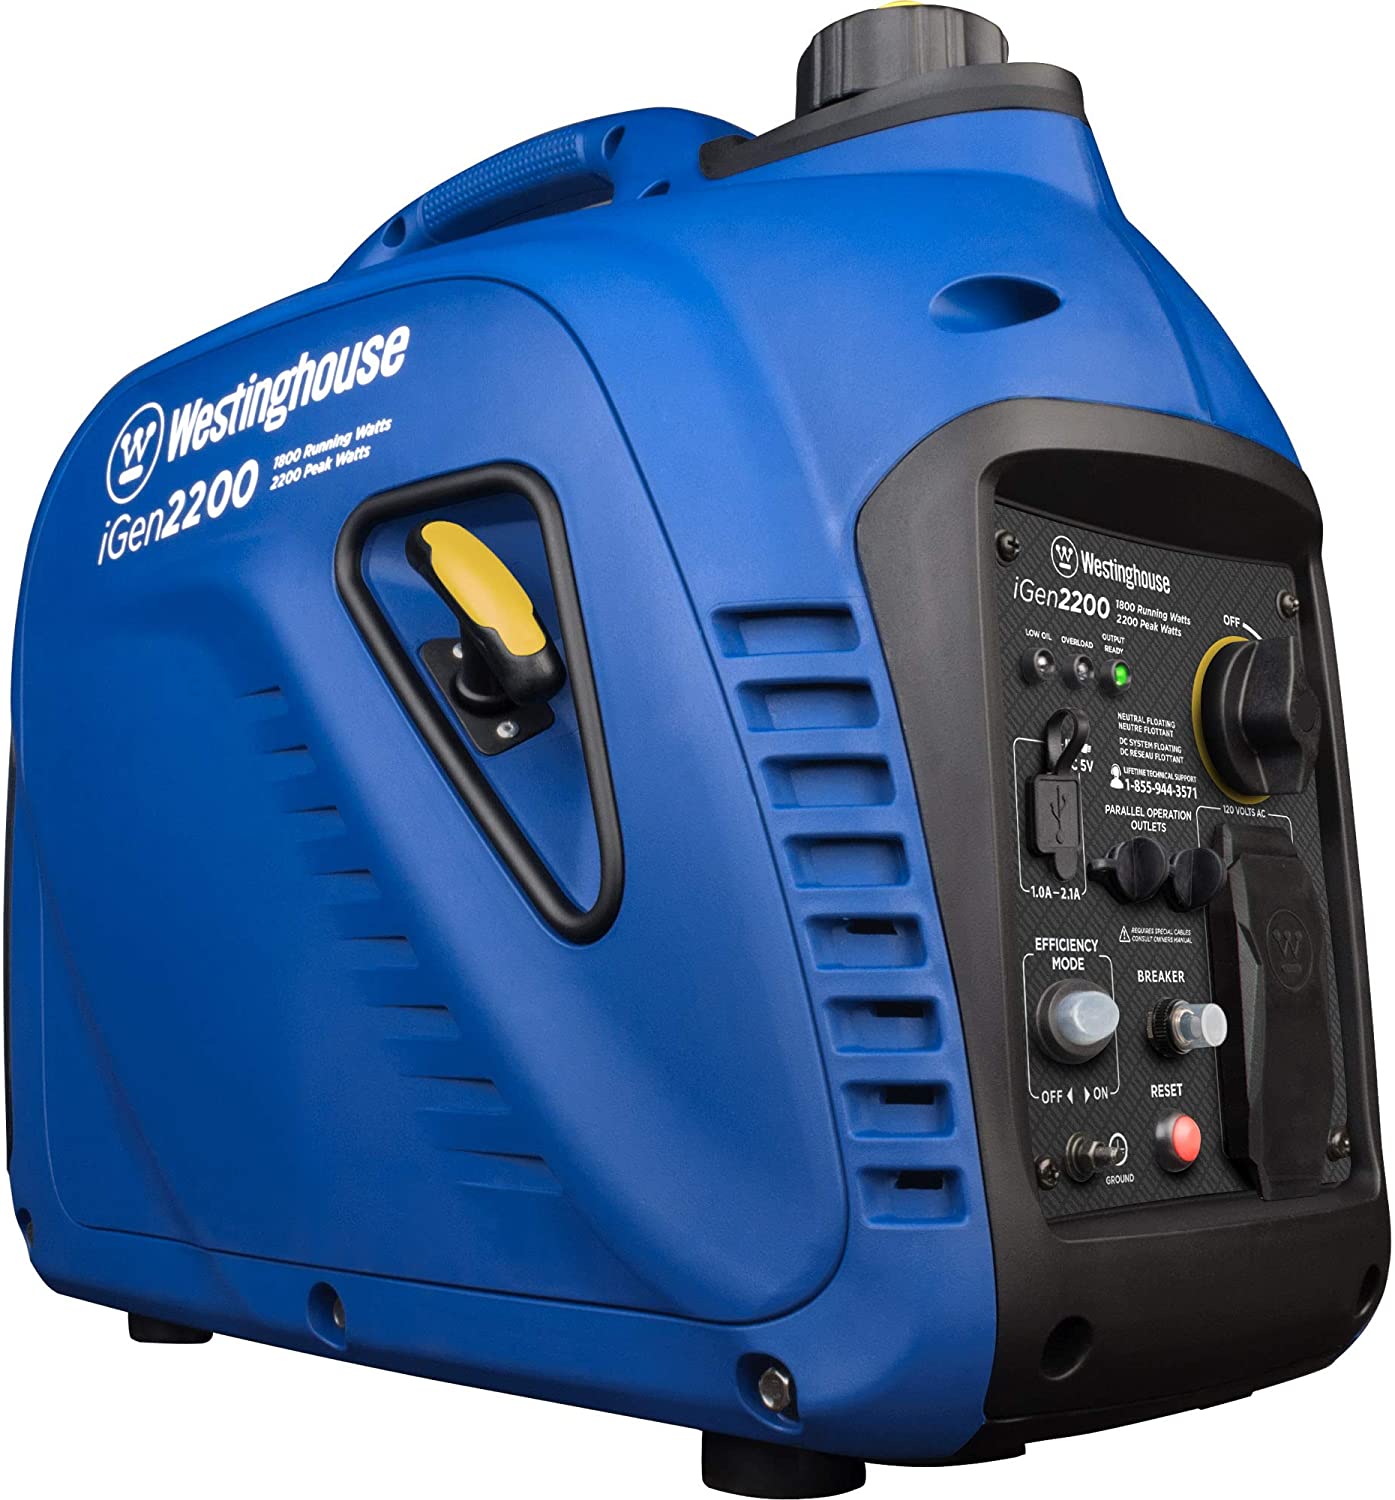 Westinghouse iGen2200 Super Quiet Portable Inverter Generator 1800 Rated & 2200 Peak Watts, Gas Powered